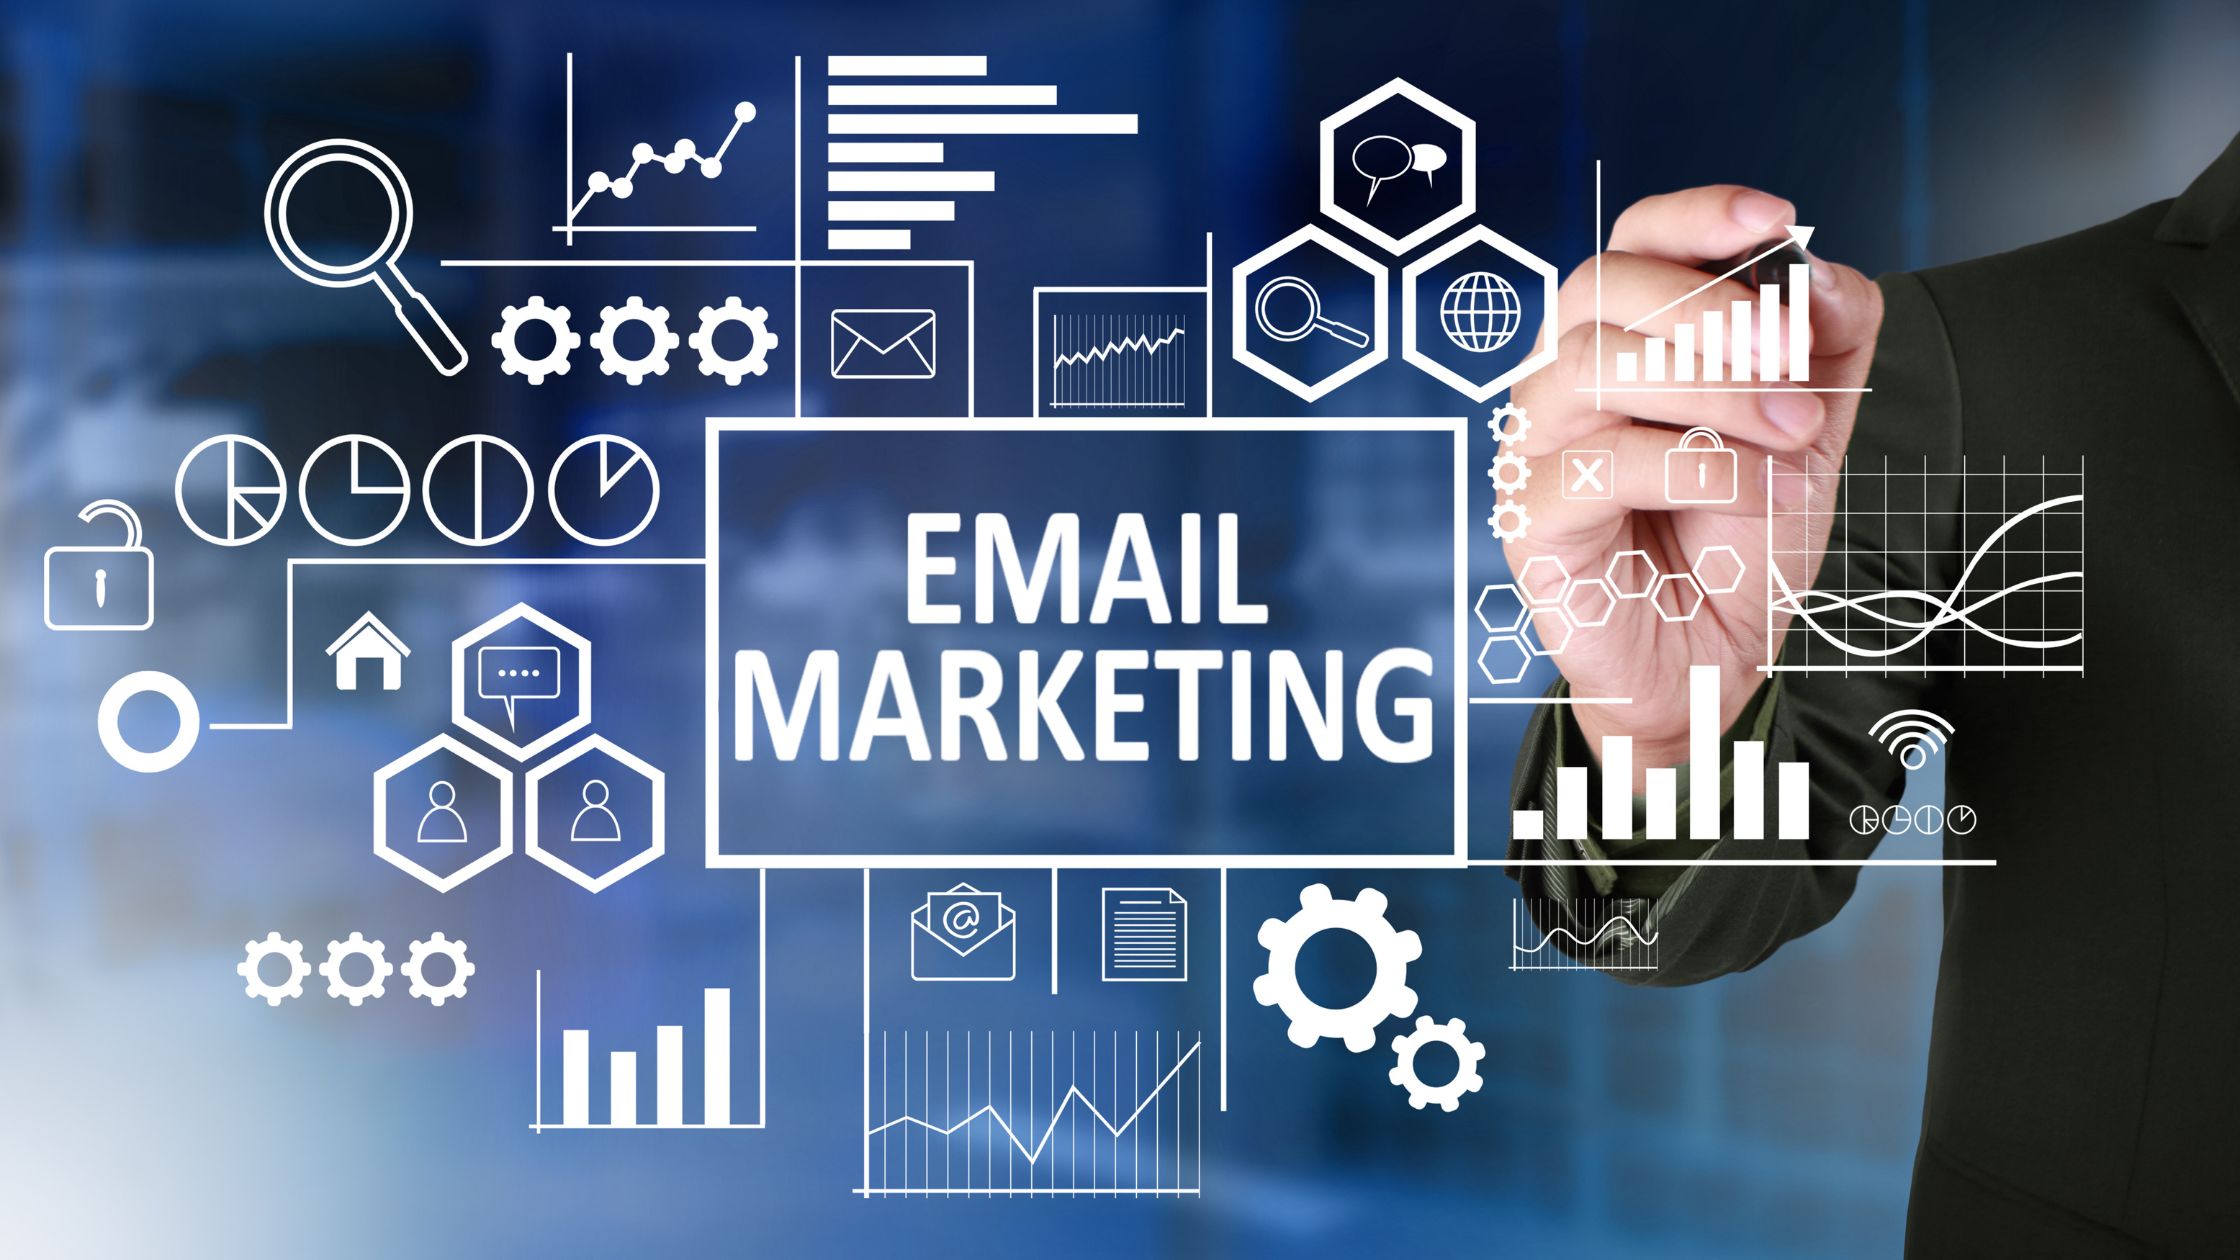 Start email marketing